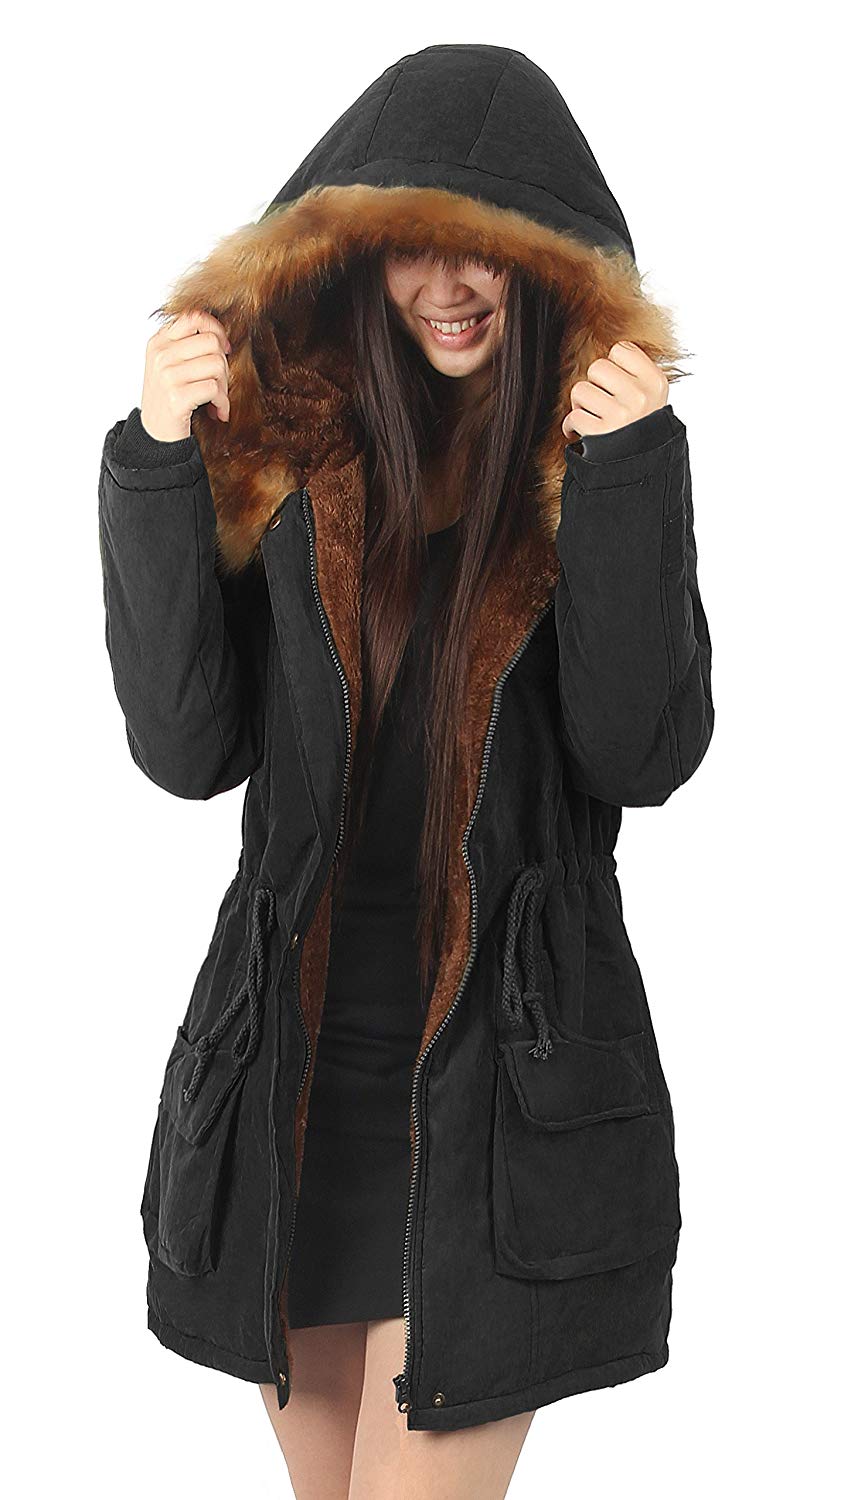 womens parka coats with fur hood amazon.com: ilovesia womens hooded warm coats parkas with faux fur jackets:  clothing EJPHPRY